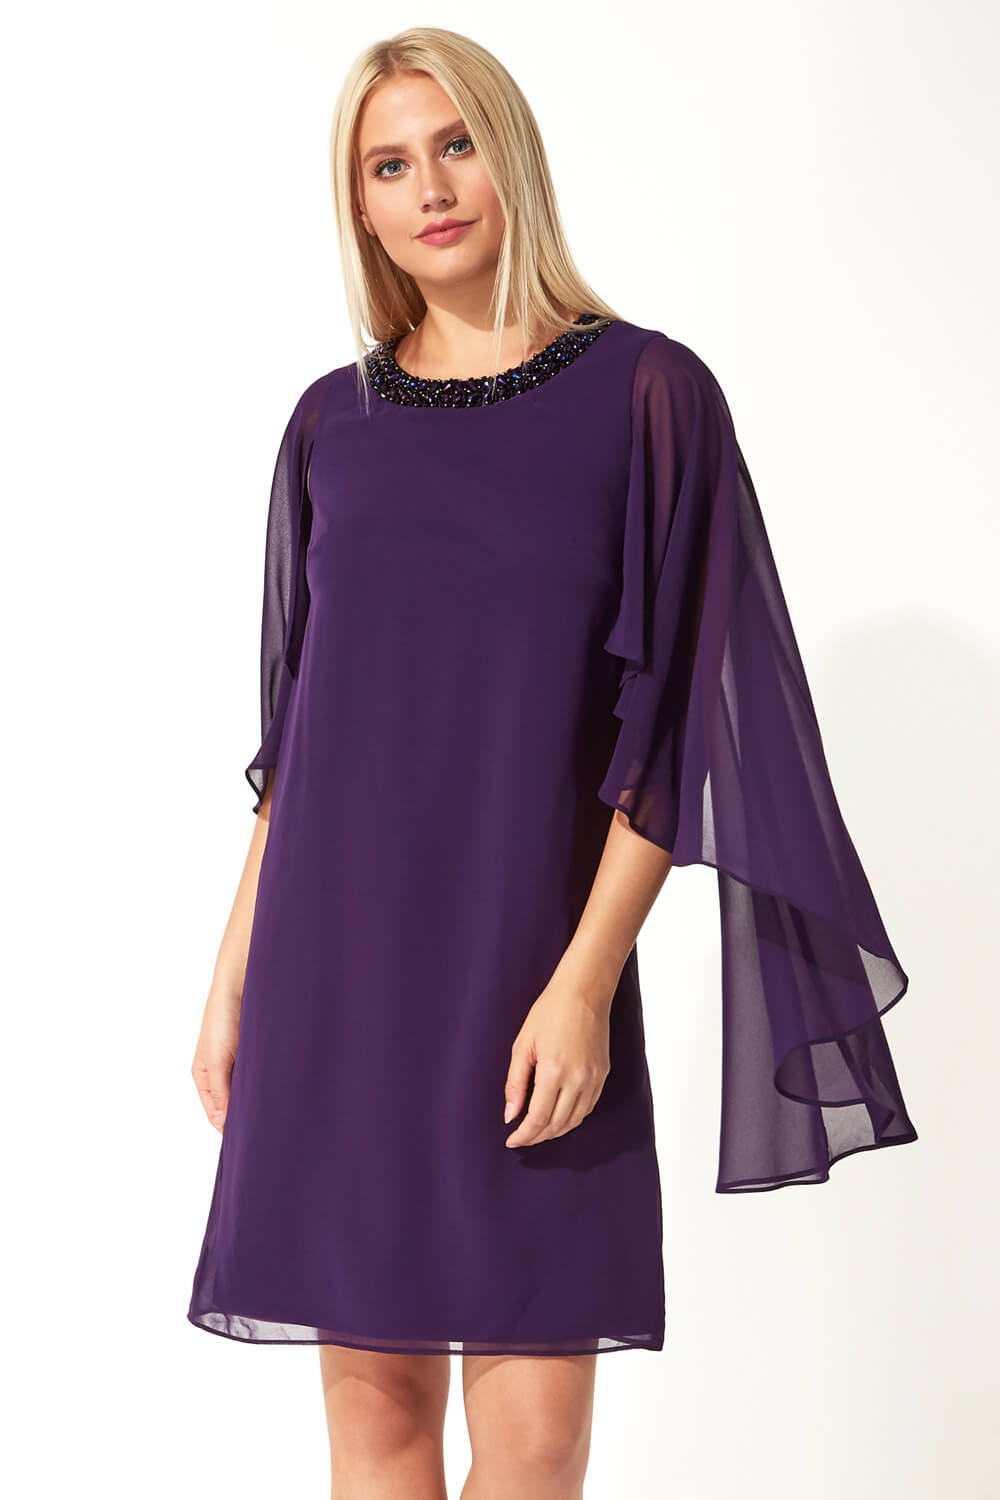 Embellished Trim Chiffon Dress in Purple - Roman Originals UK